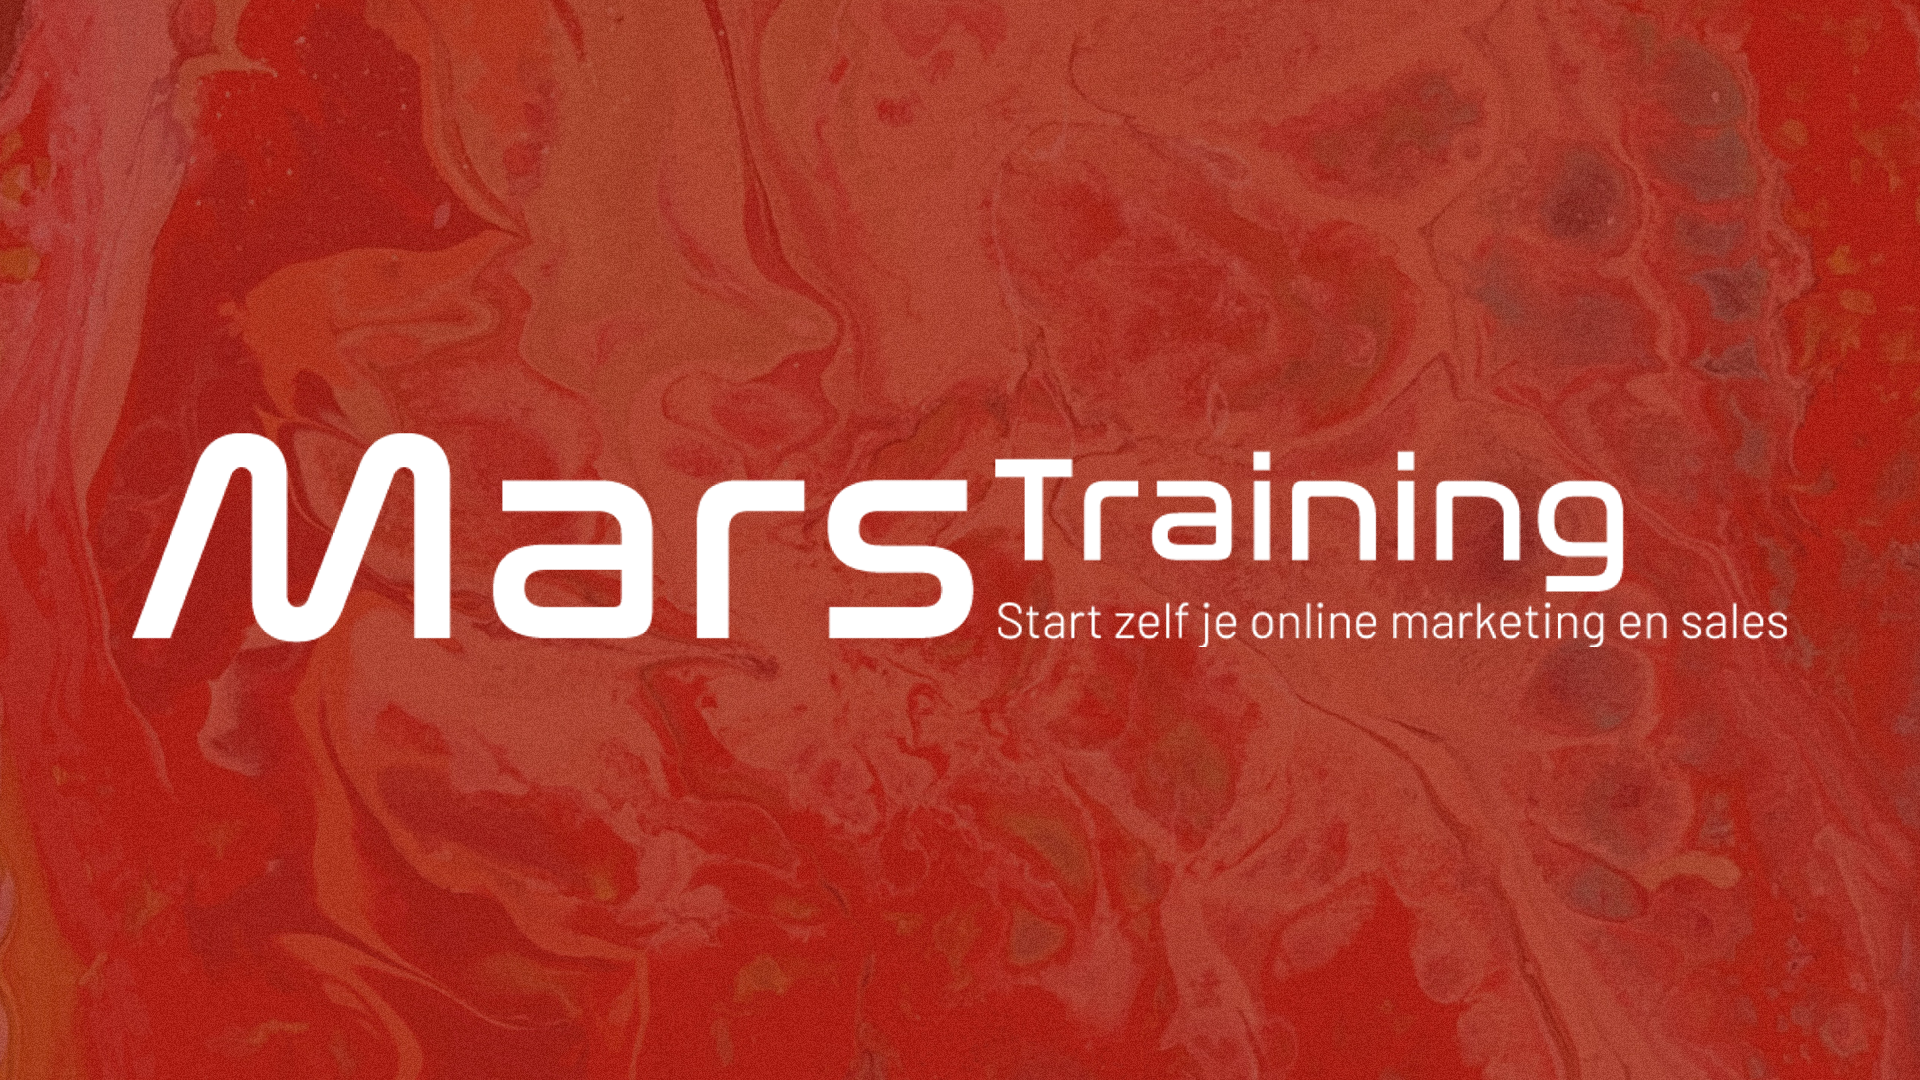 Mars training